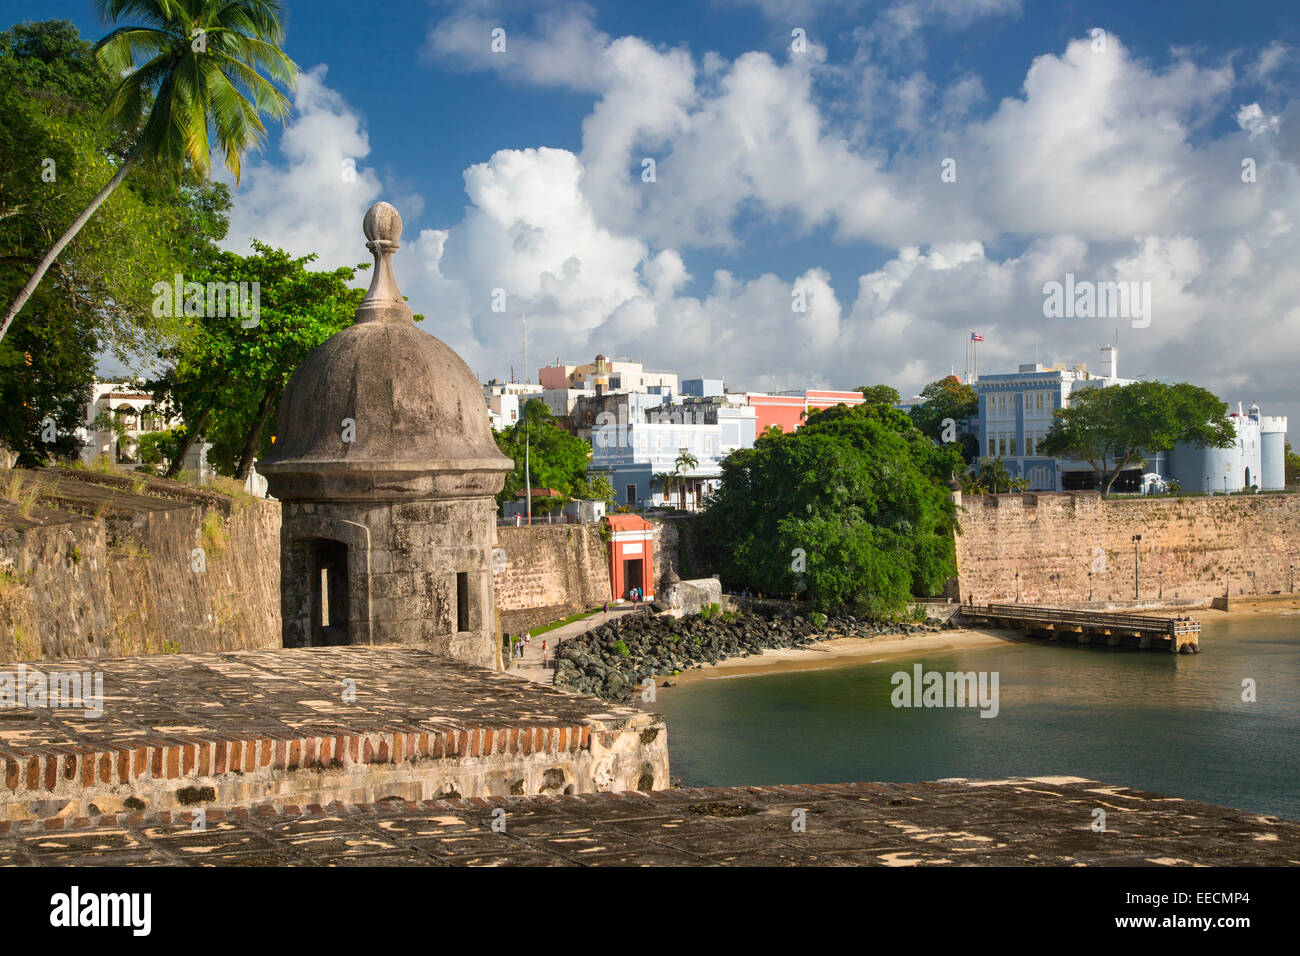 A Garita - sentry box, along the fortified walls of Old Town, San Juan, Puerto Rico Stock Photo